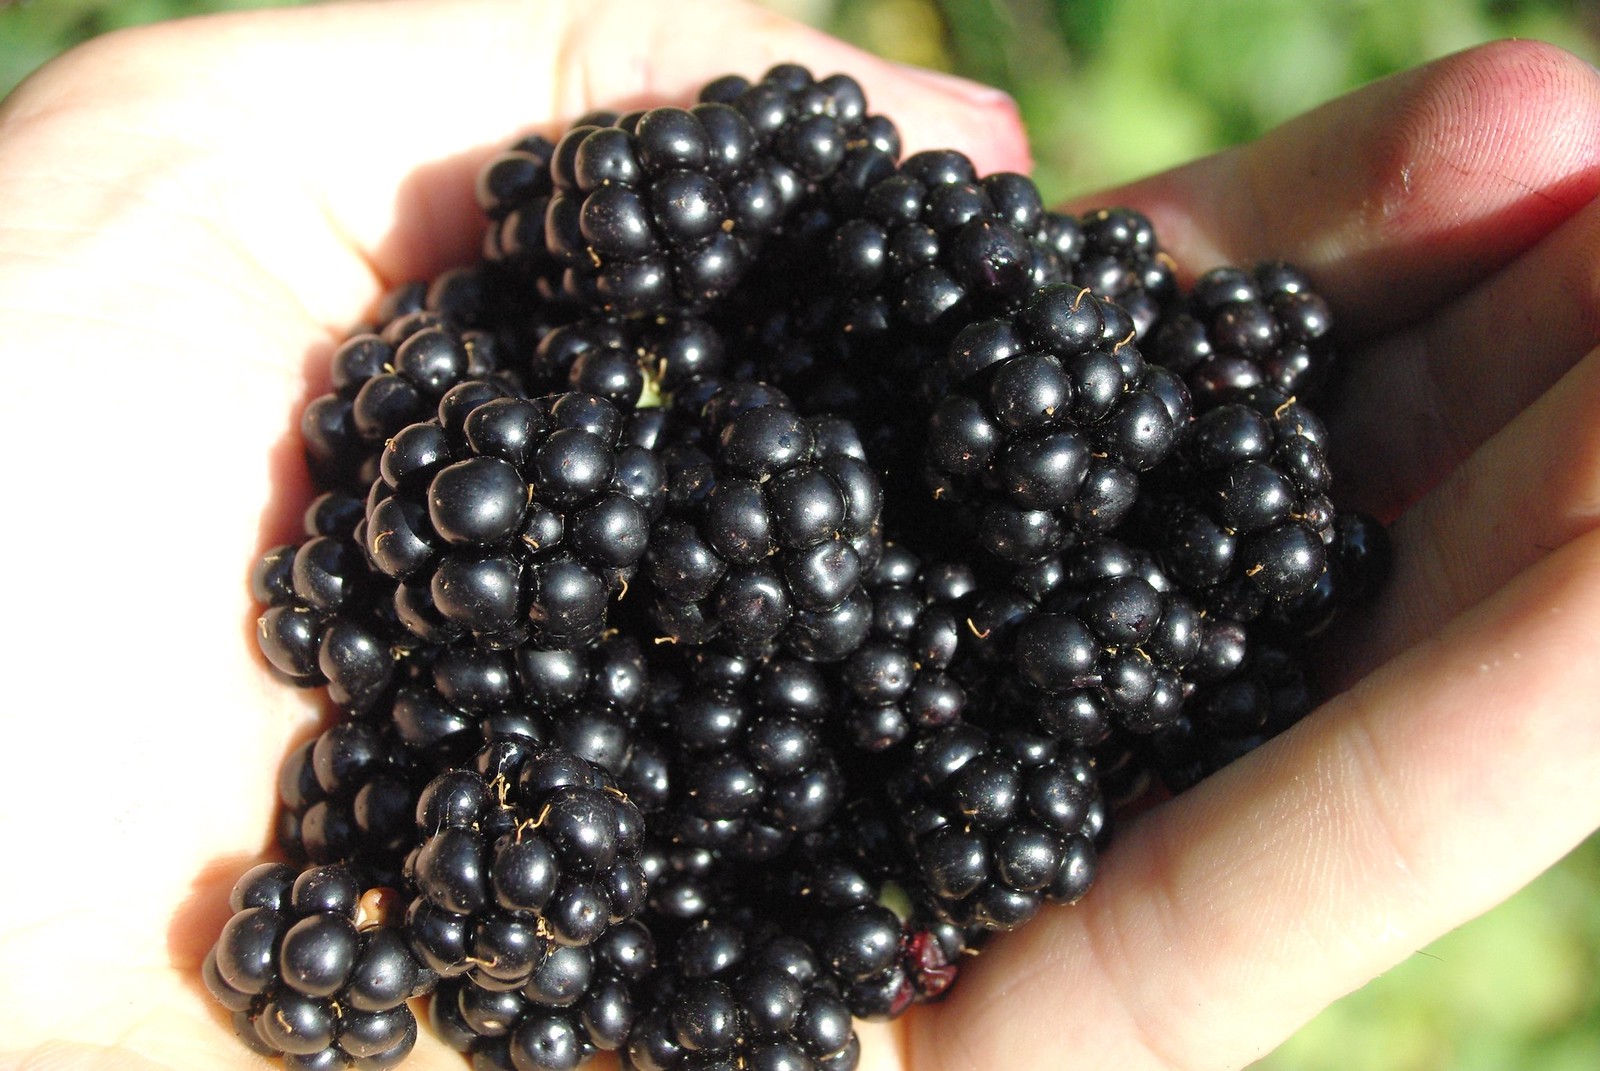 sun warmed blackberries taste the best!